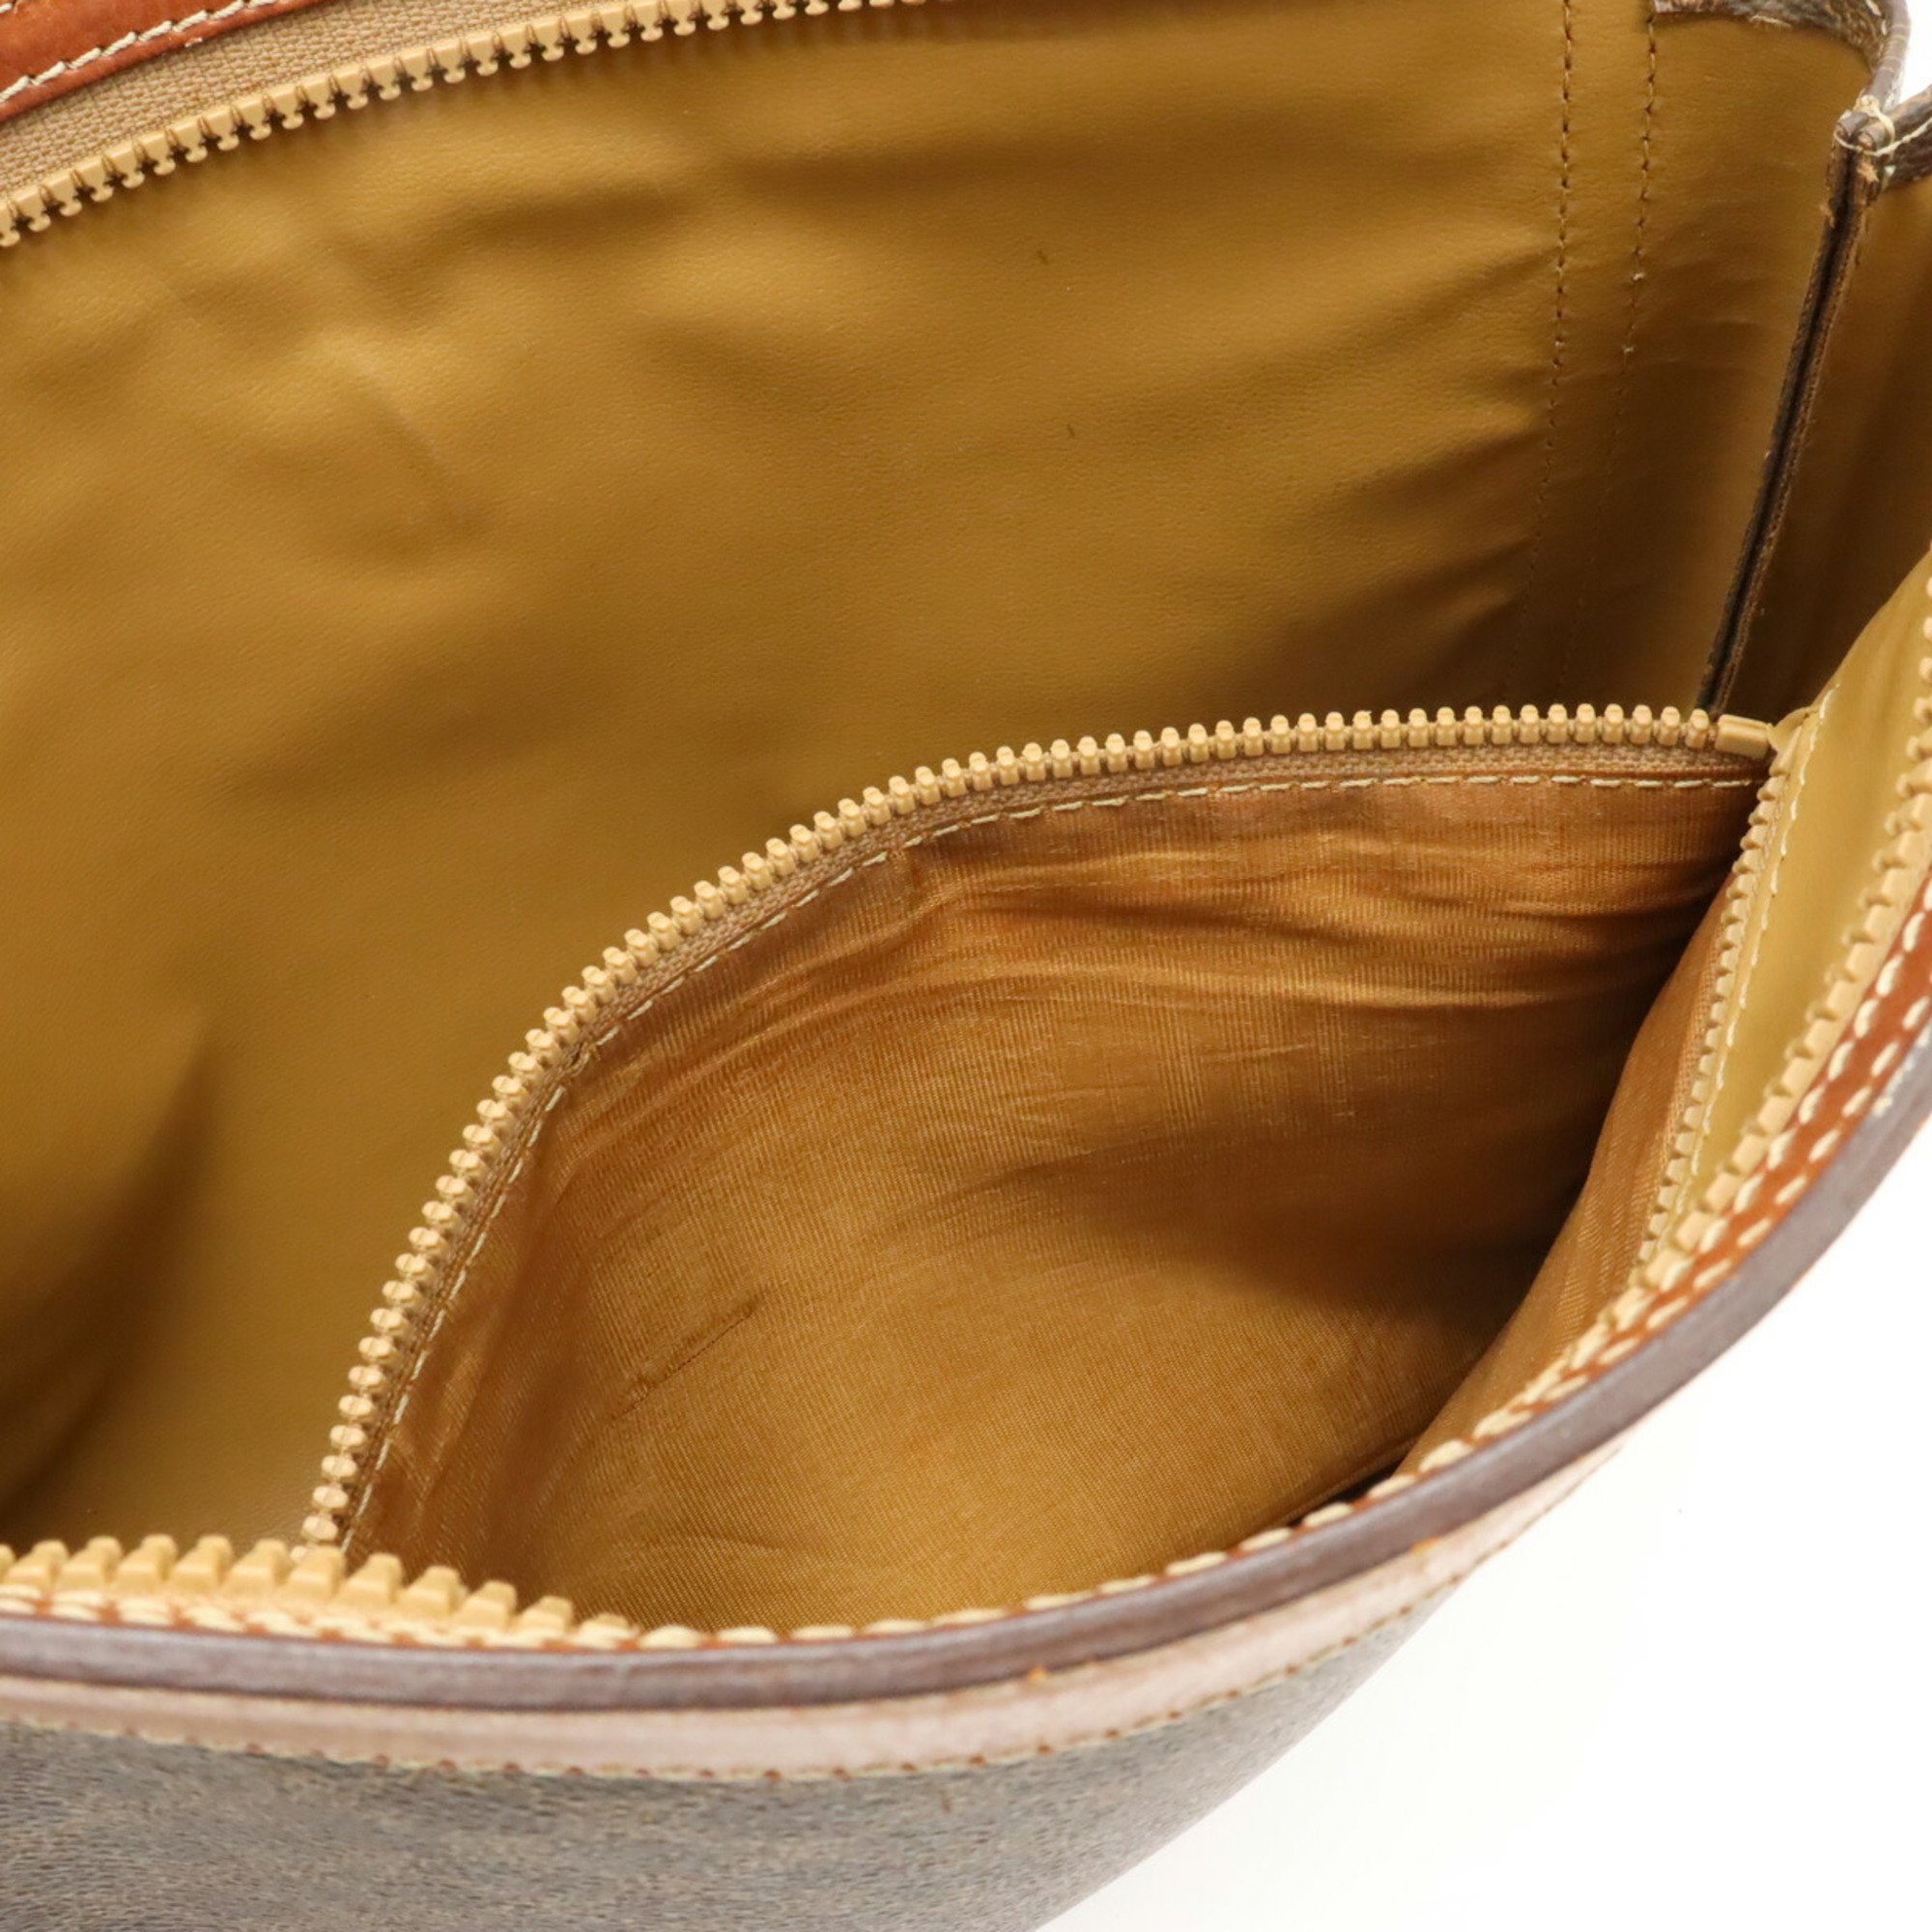 CELINE Macadam pattern second bag clutch pouch PVC leather dark brown tea